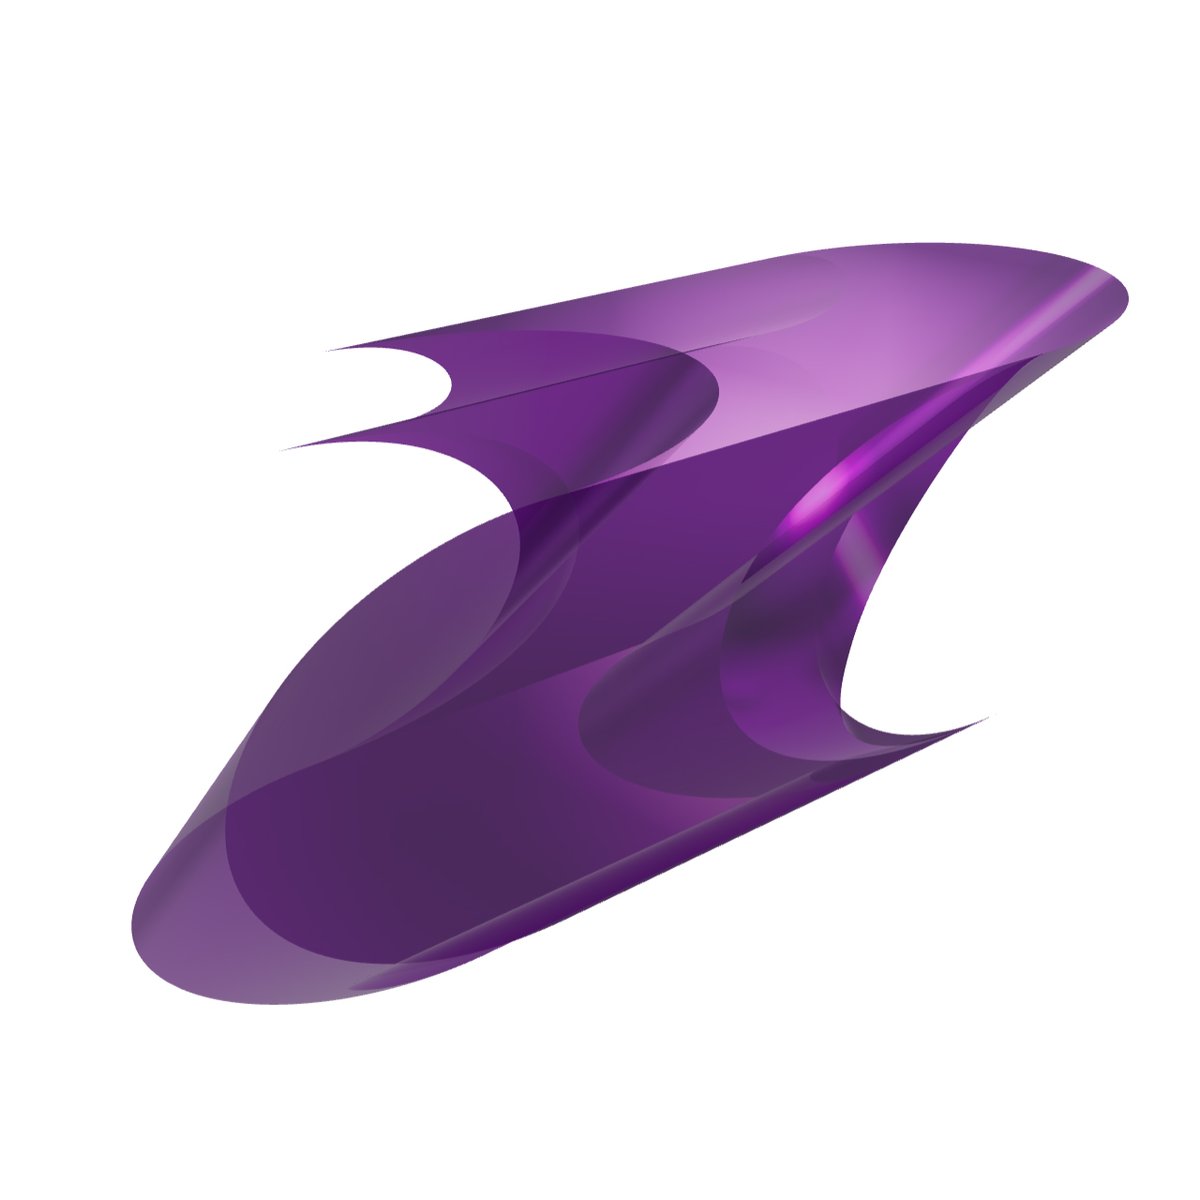 a' skinny hex-purple haze #008
It is a reconstructed form of parts cut from a skinny hexagonal prism.
opensea.io/assets/ethereu…
#opensea #openseanft #NFT #NFTs #NFTartist #nftart #cryptoart #3dart #nft3d #NFTJapan